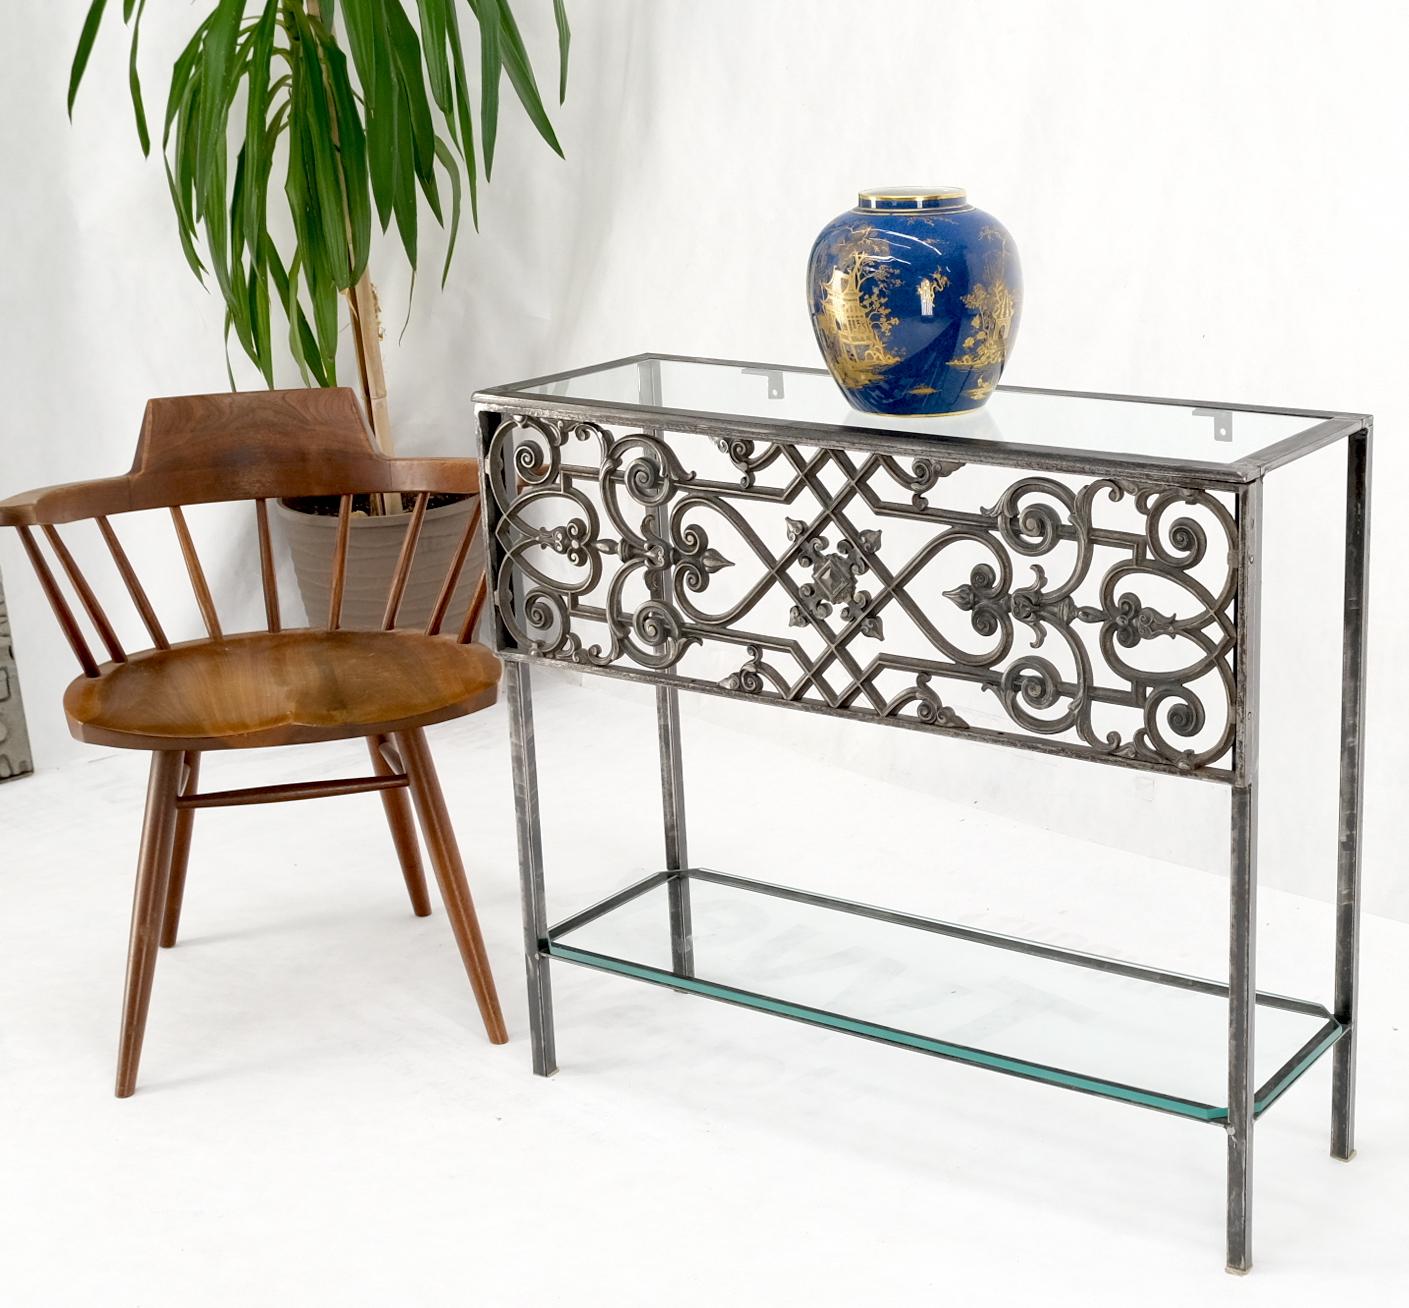 Custom made polished cast iron ornament 2 tier glass top lower shelf console sofa table.